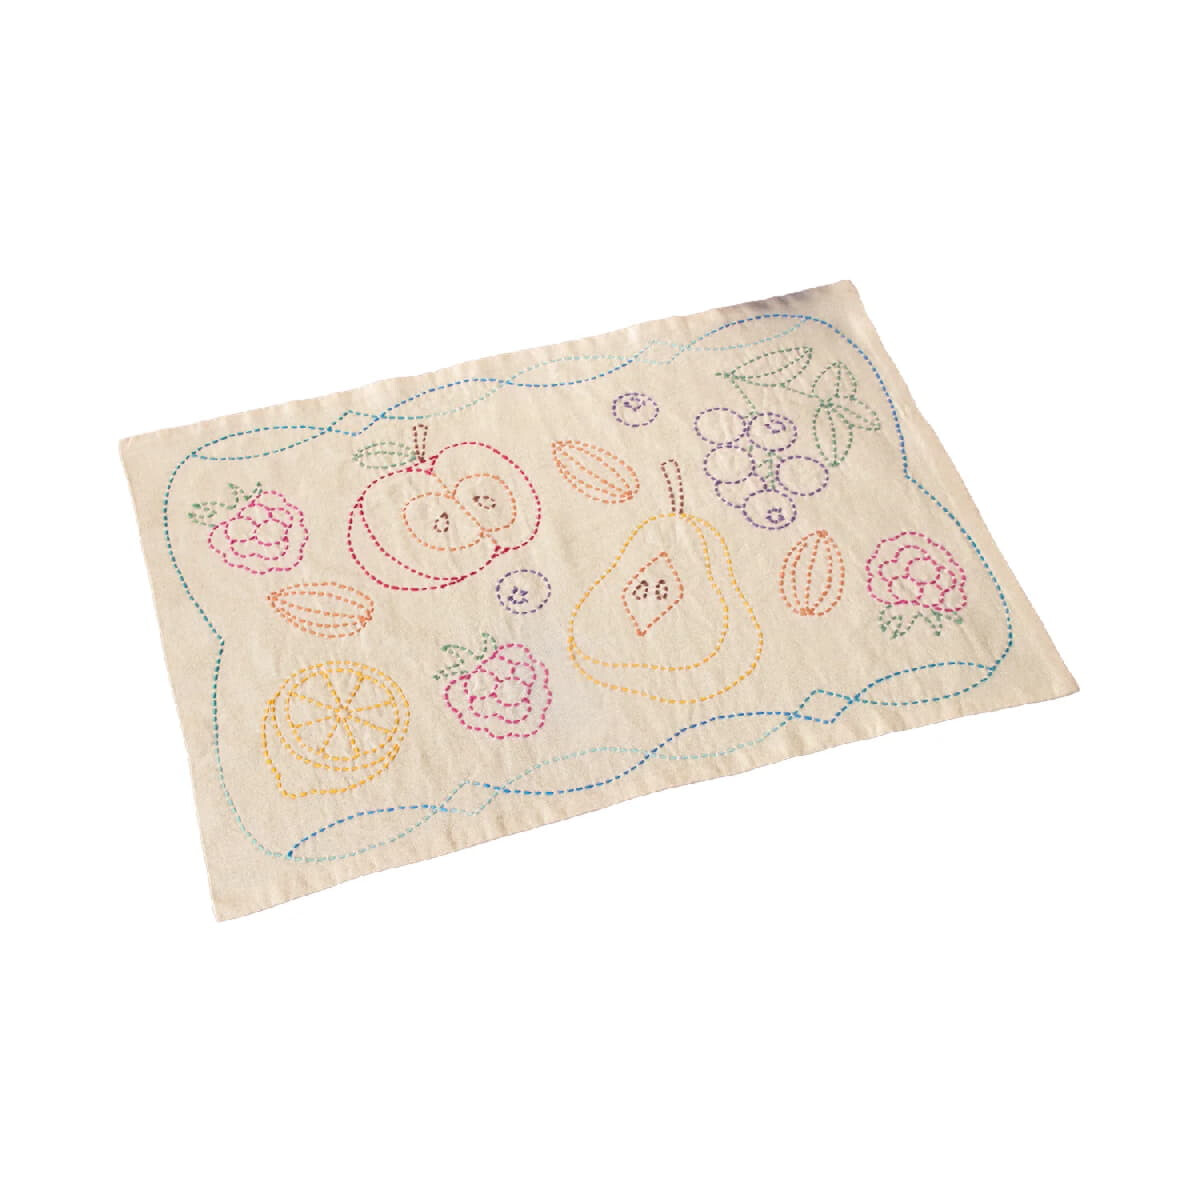 Olympus gestempeld Sashiko borduurpakket "Placemat...